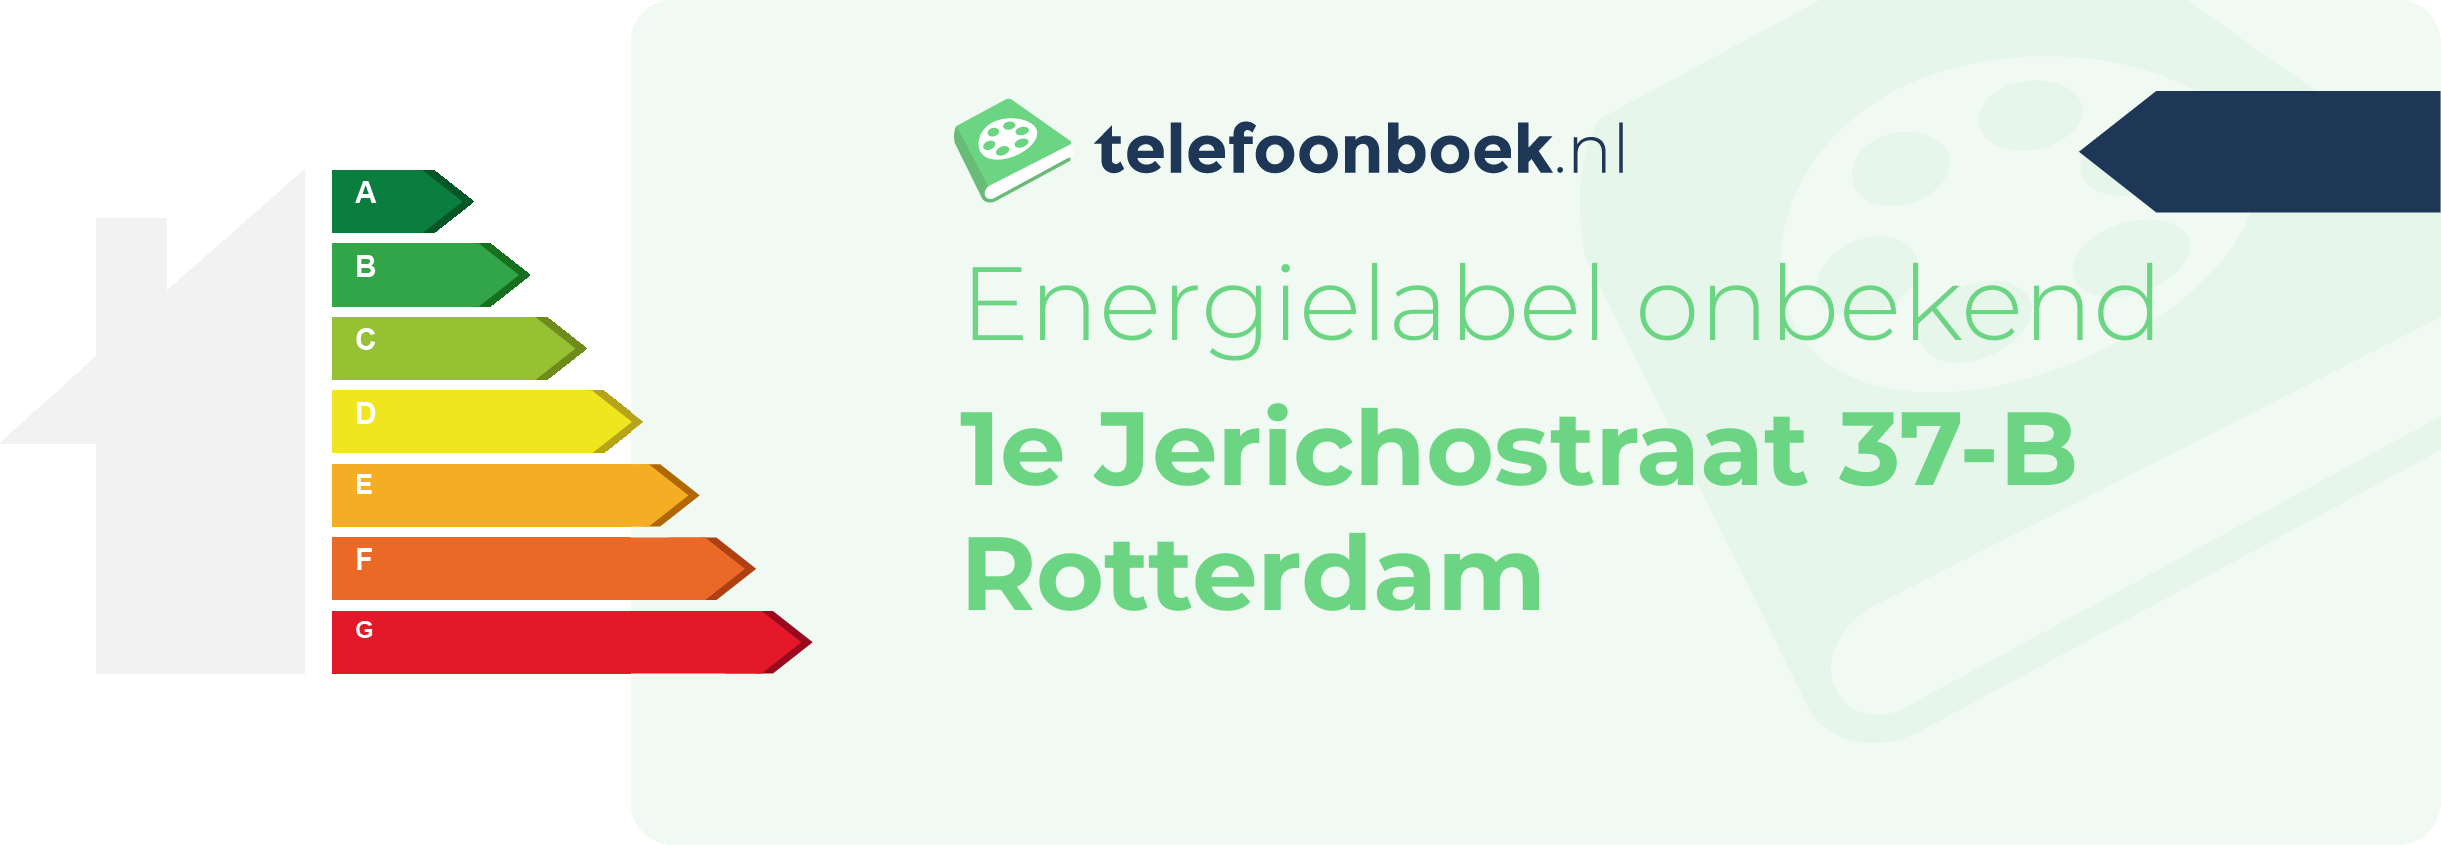 Energielabel 1e Jerichostraat 37-B Rotterdam